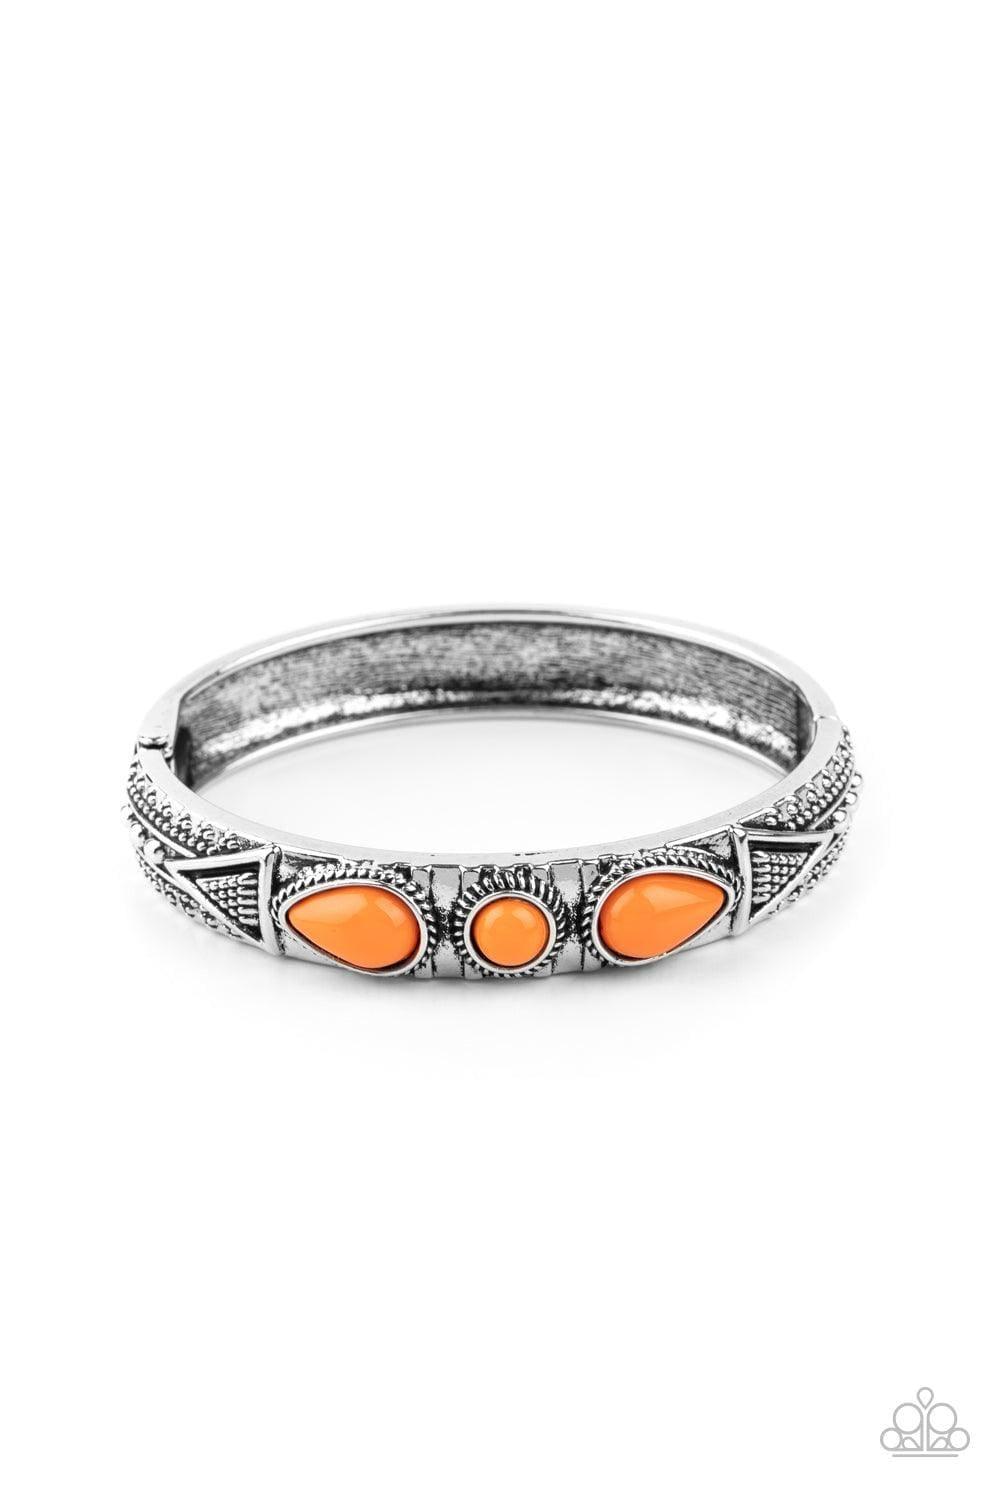 Paparazzi Accessories - Radiant Ruins - Orange Bracelet - Bling by JessieK